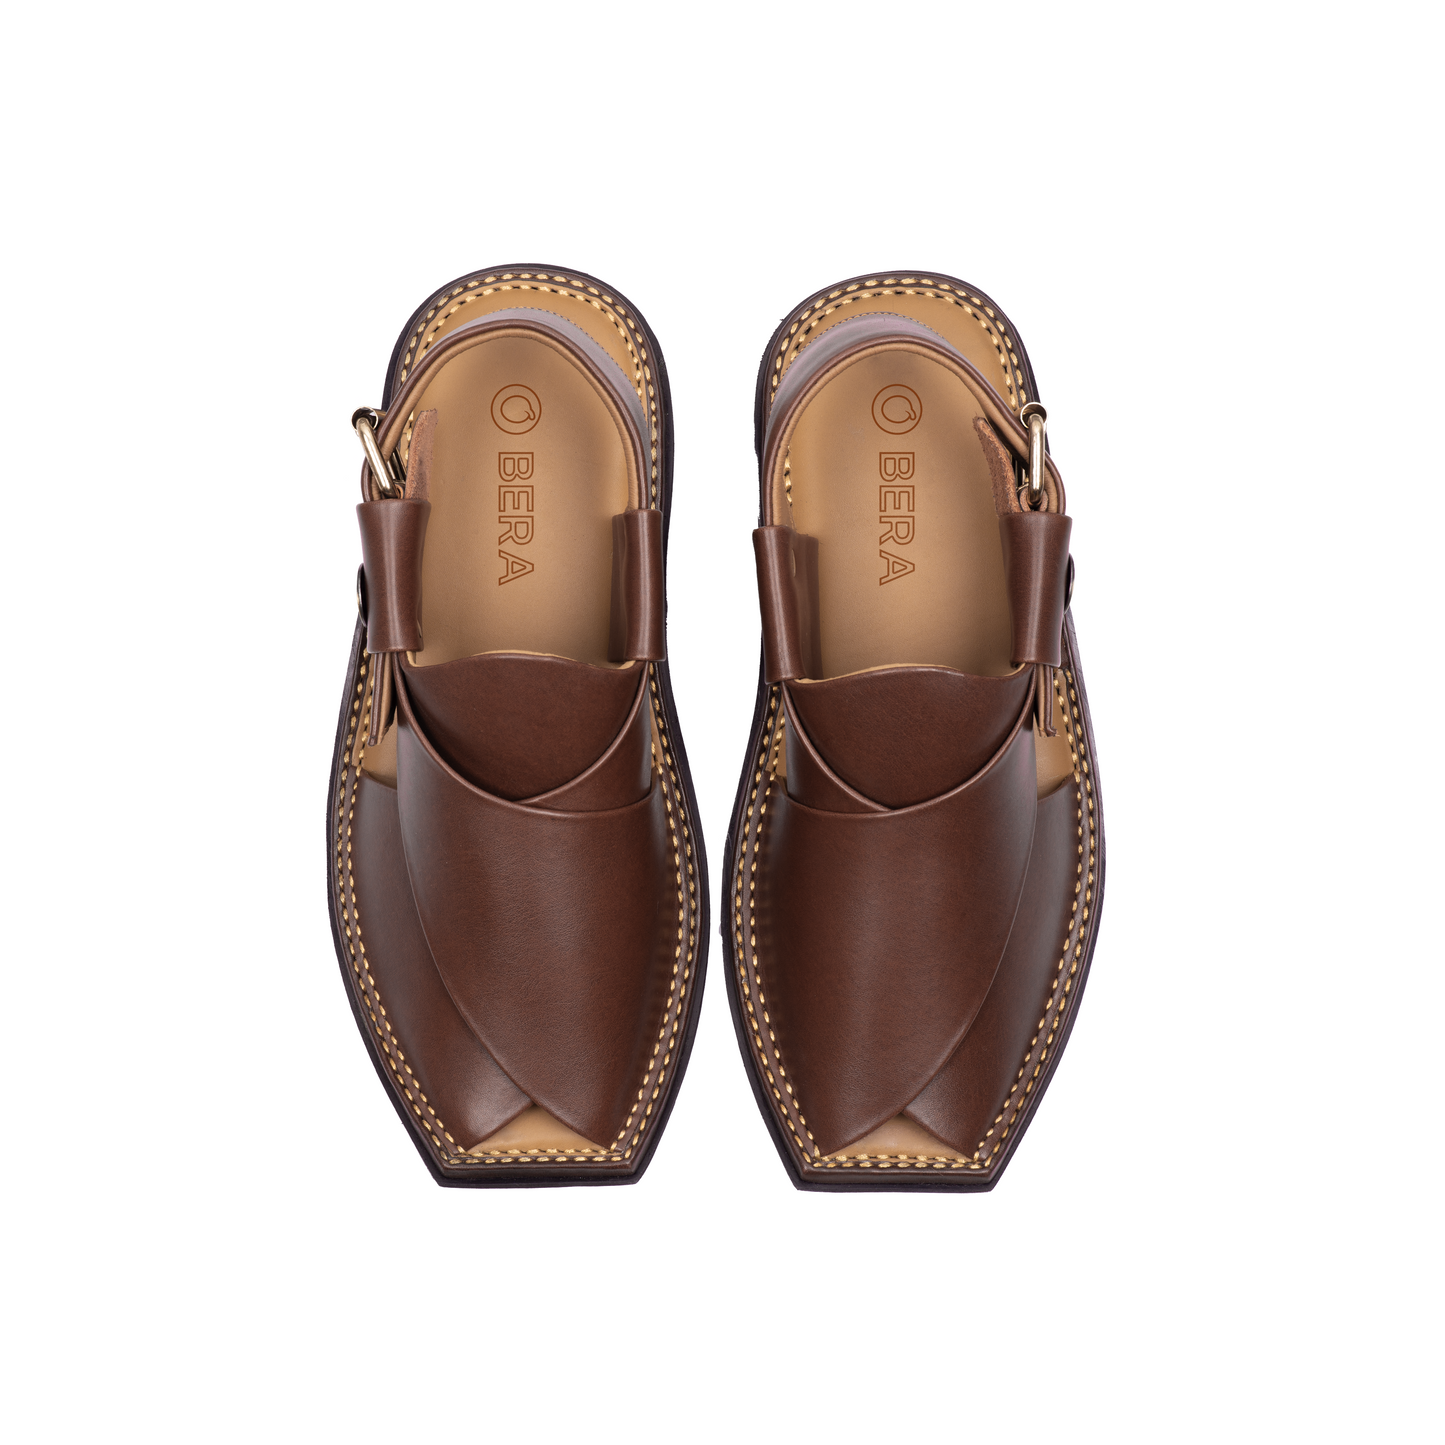 Burgundy T Shape luxury and stylish shoes handmade leather for men-BERA